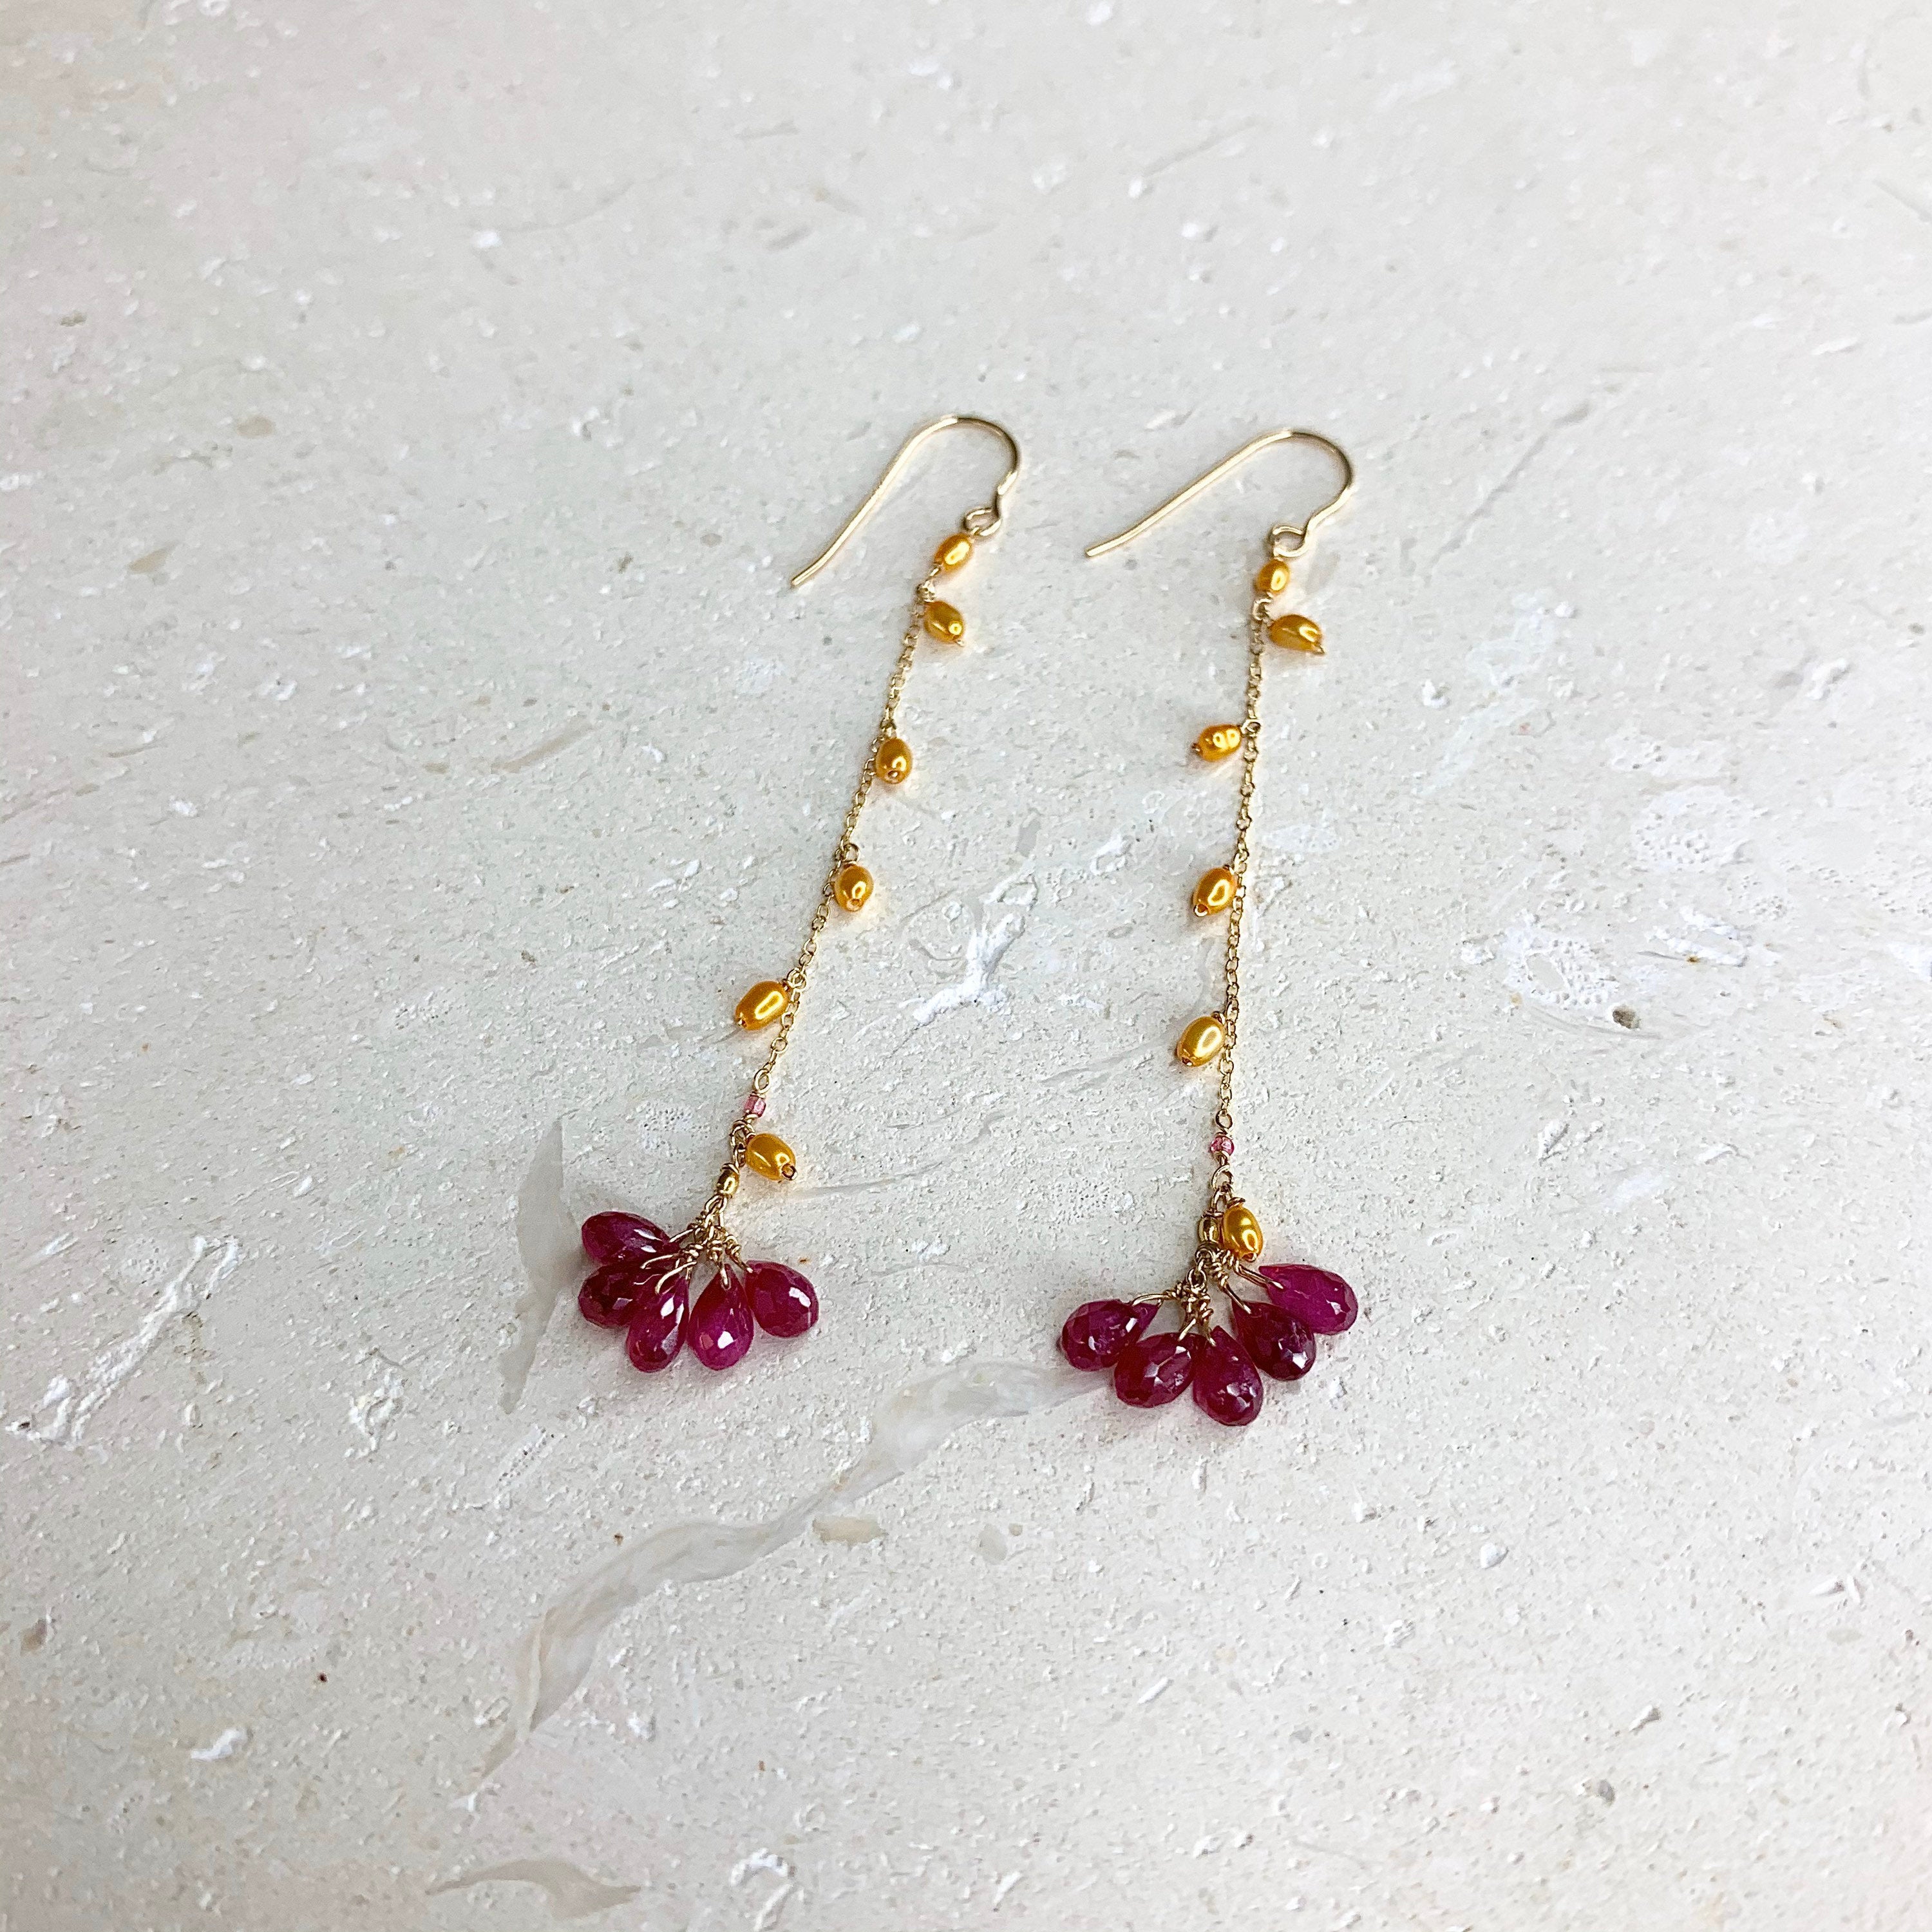 14k Gold Earrings w/ Rubies, Freshwater Pearls & 18k Gold Nugget